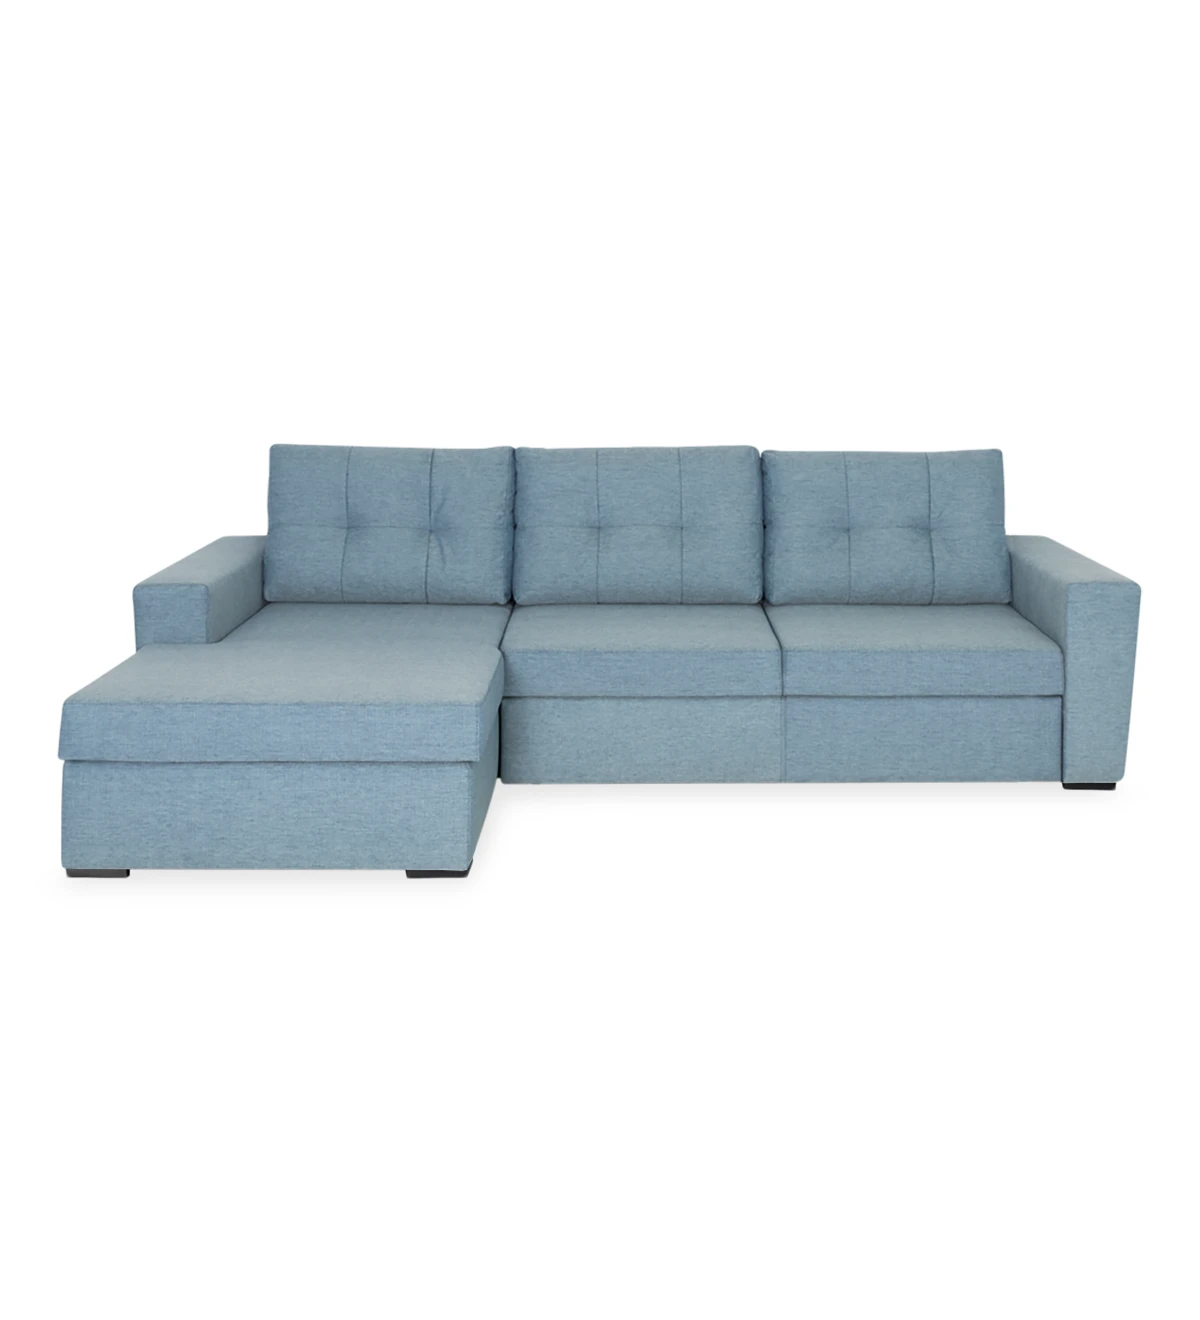 Sofá cama Macau 2 plazas y chaise longue izquierdo, tapizado en tela azul, 284 cm.